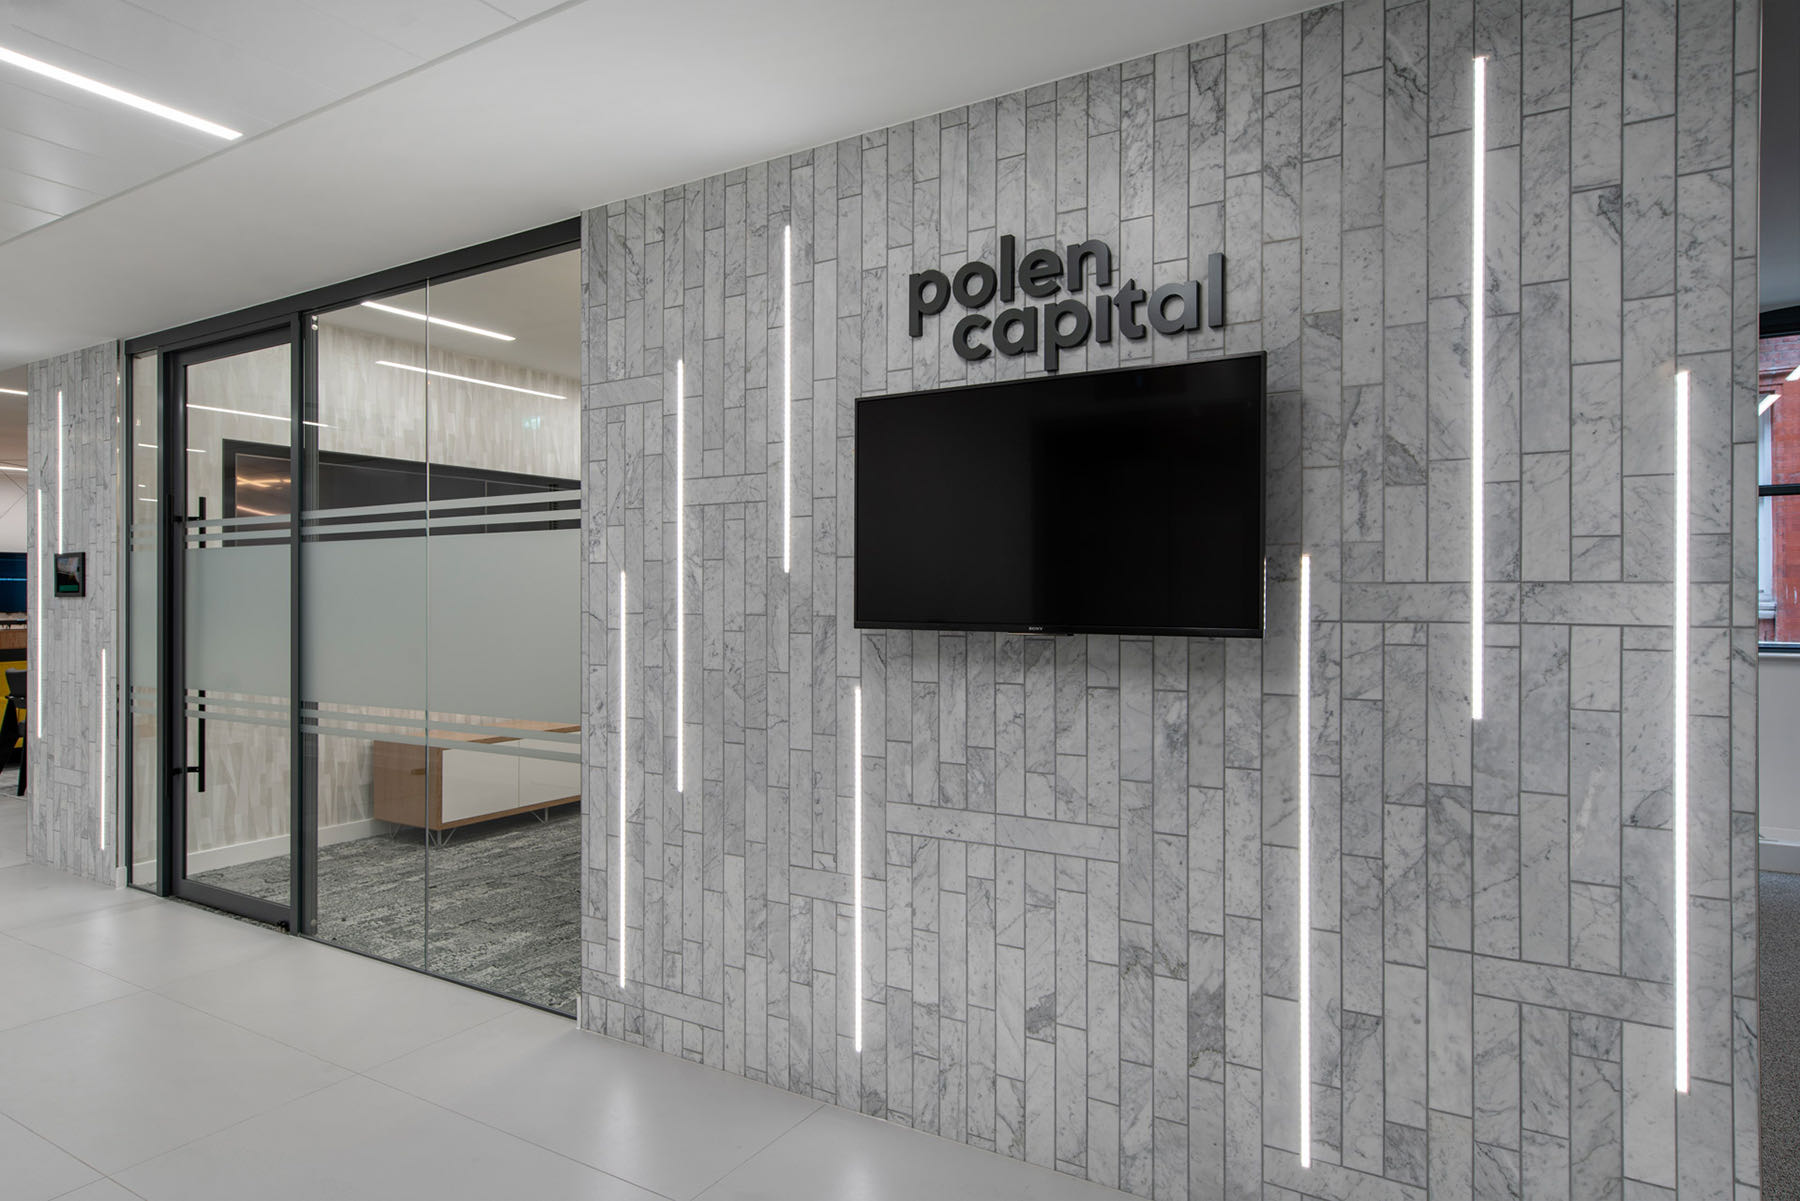 polen-capital-london-office-2